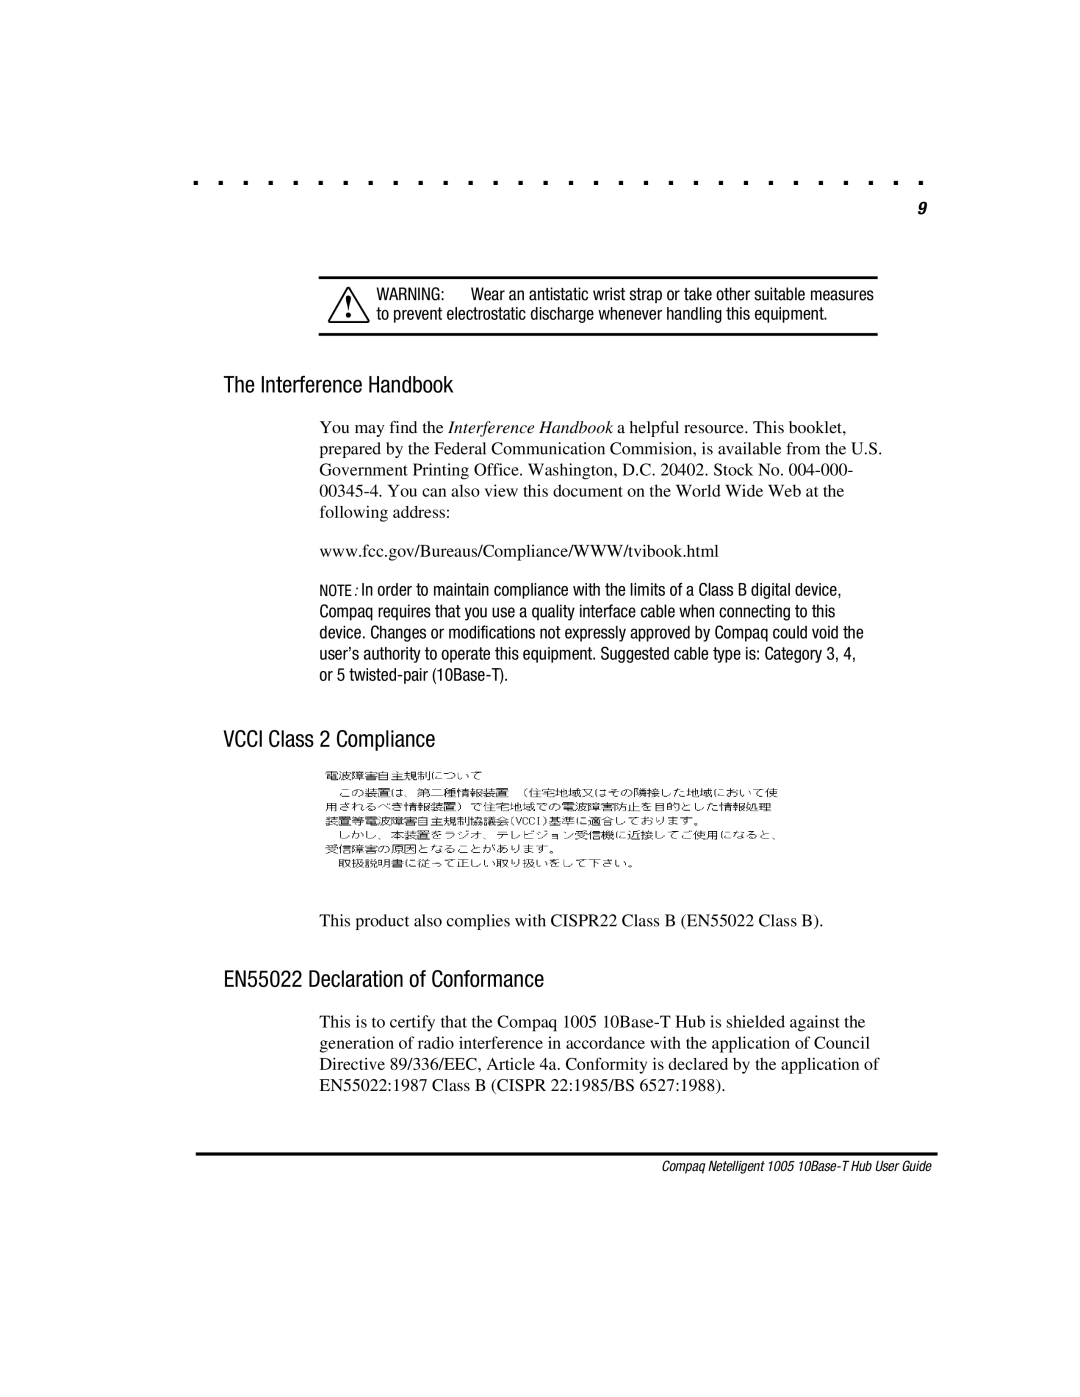 Compaq 1005 manual The Interference Handbook, VCCI Class 2 Compliance, EN55022 Declaration of Conformance 